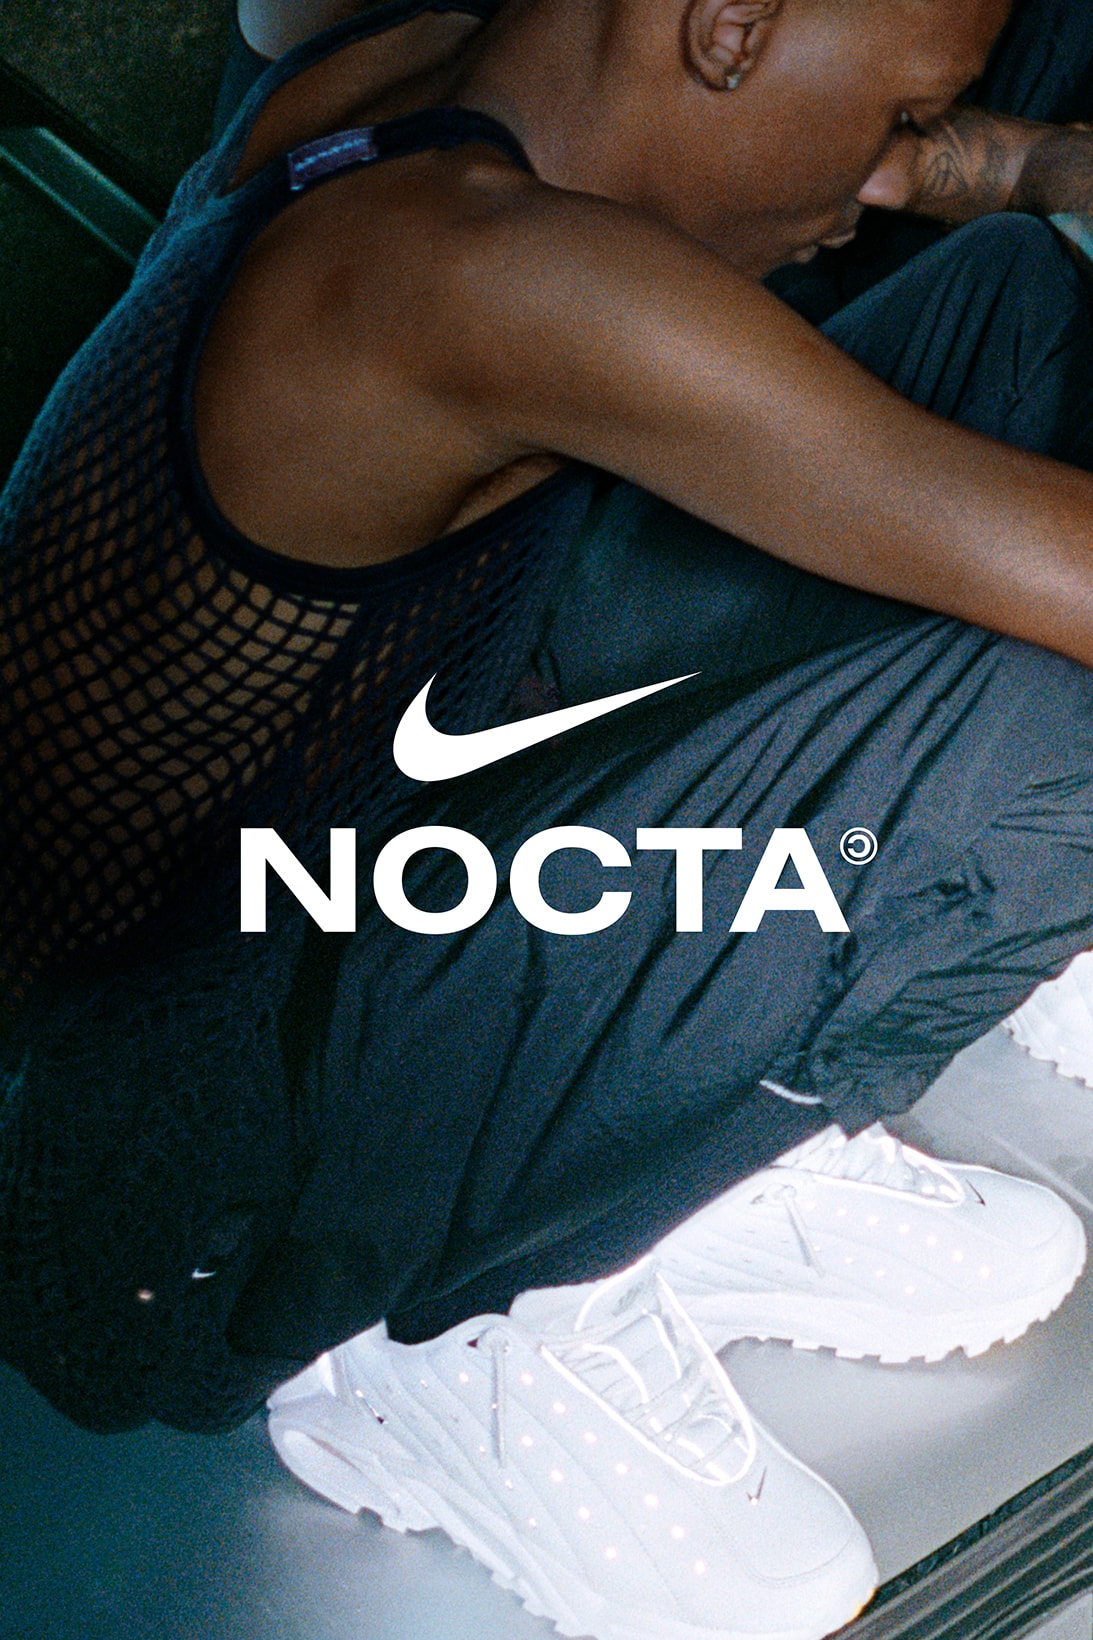 Drake NOCTA Nike Hot Step Air Terra Triple White Collaboration Sneakers Footwear Shoes Kicks